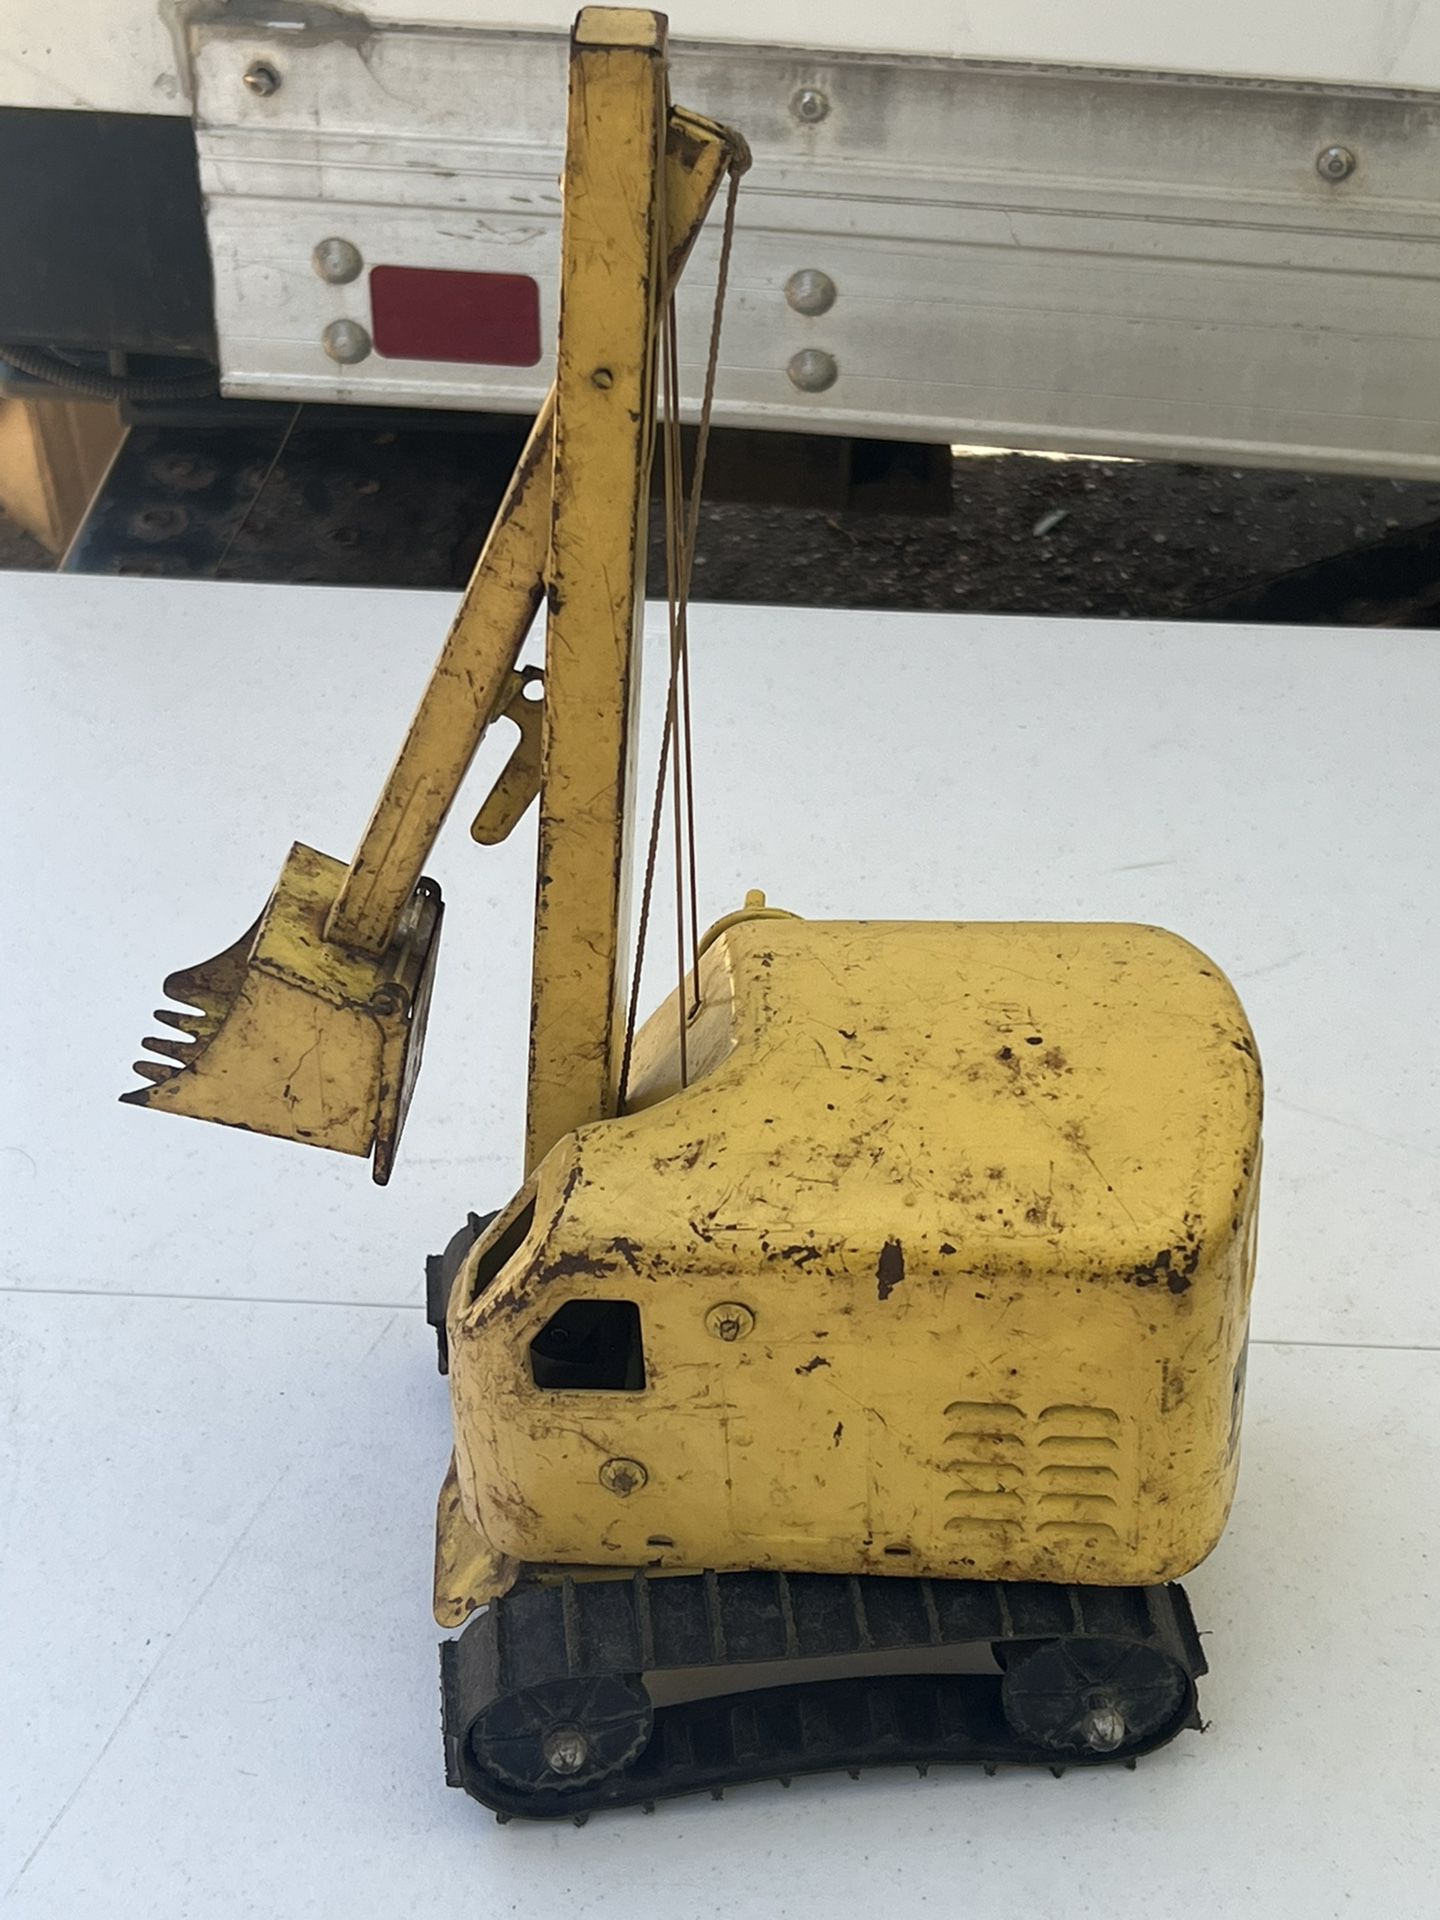 Vintage Structo pressed steel steam shovel excavator 